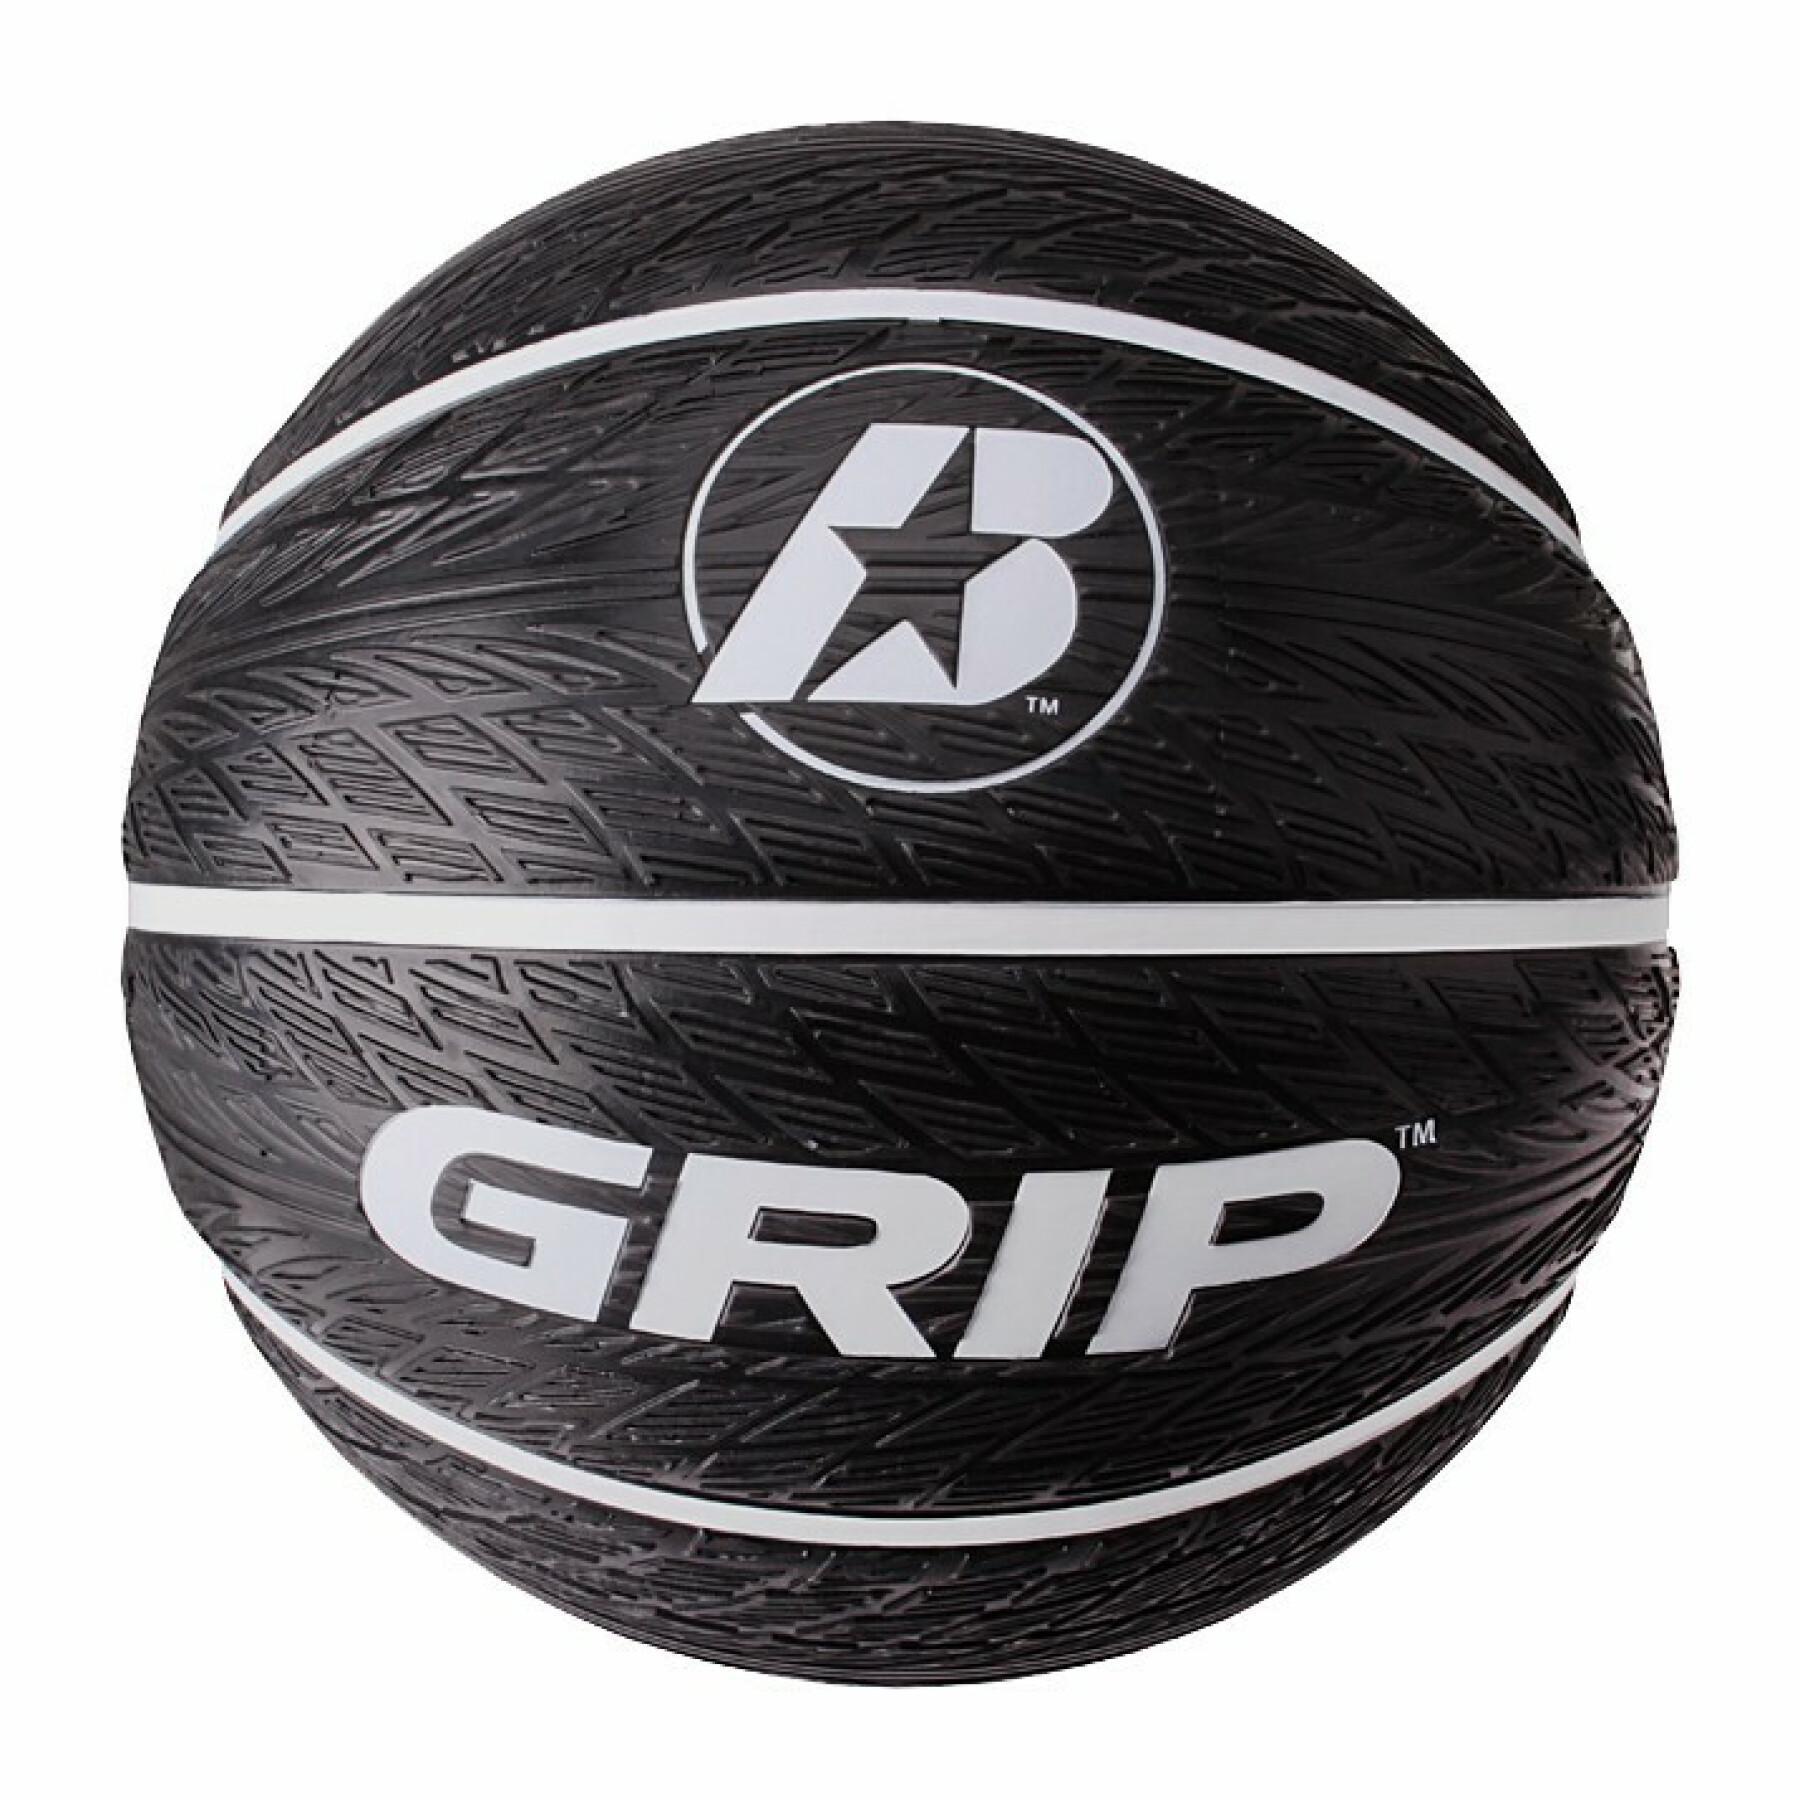 Basketboll Baden Sports Street Grip